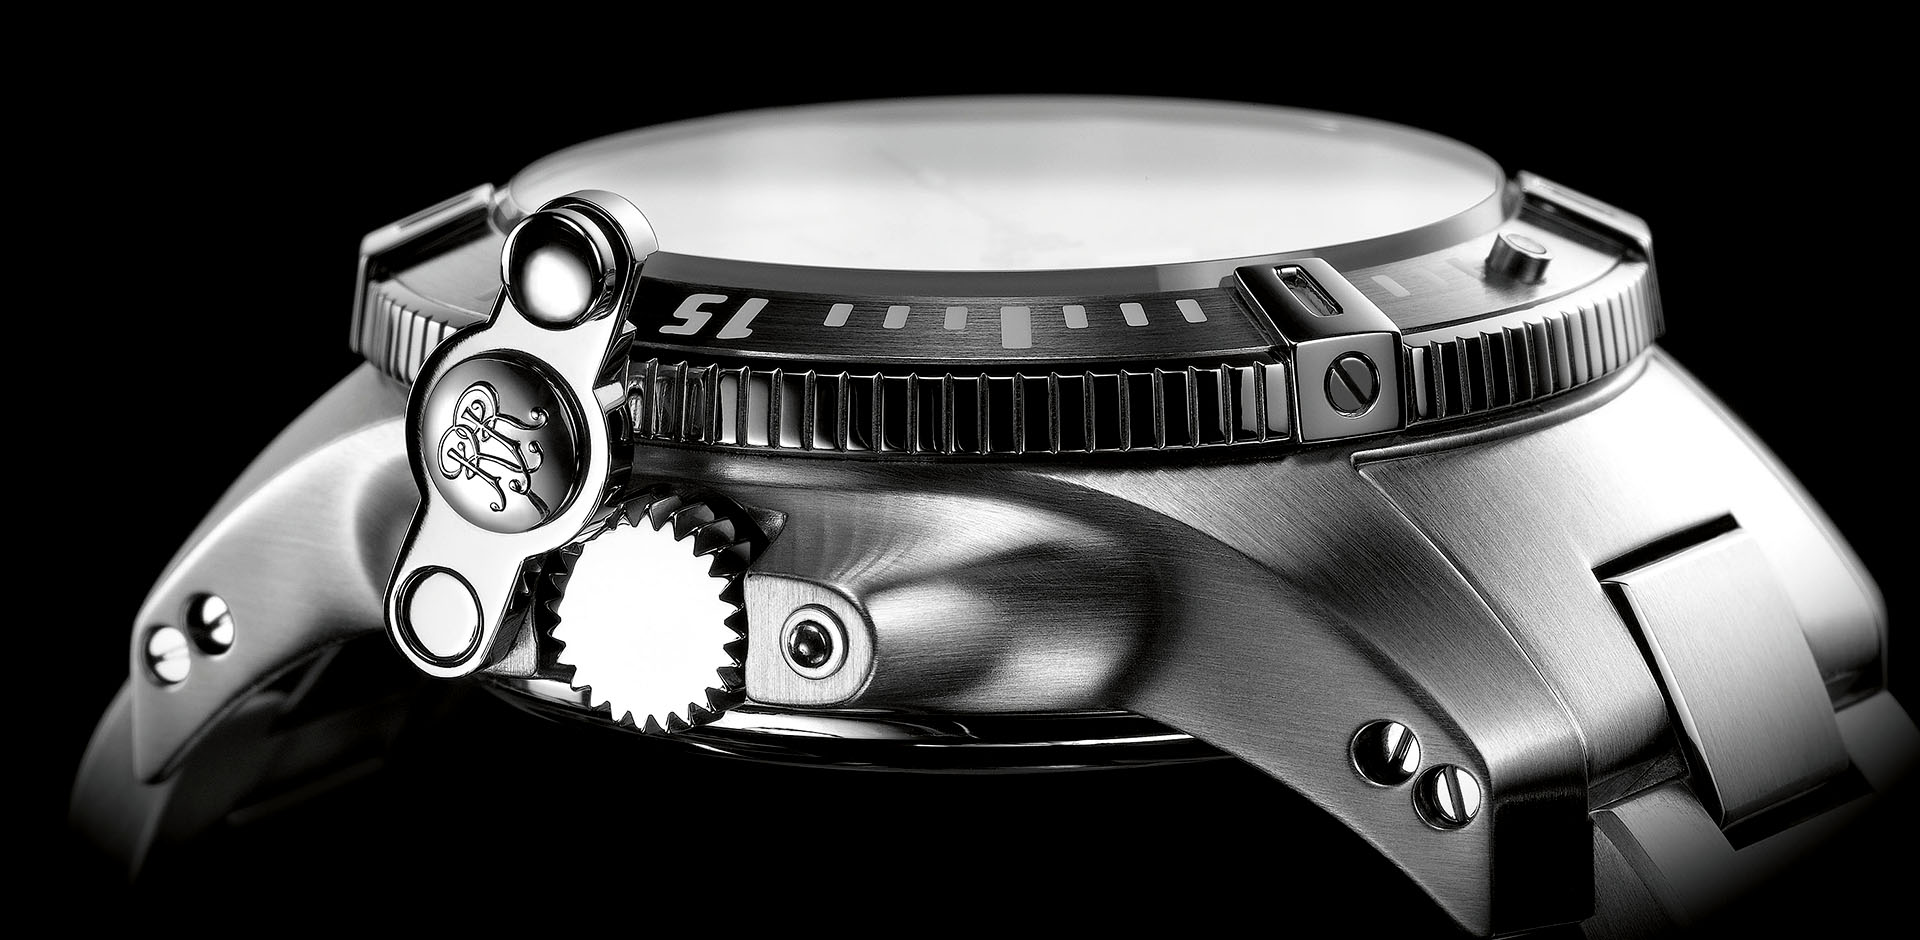 The Best Website To Buy Replica Watches